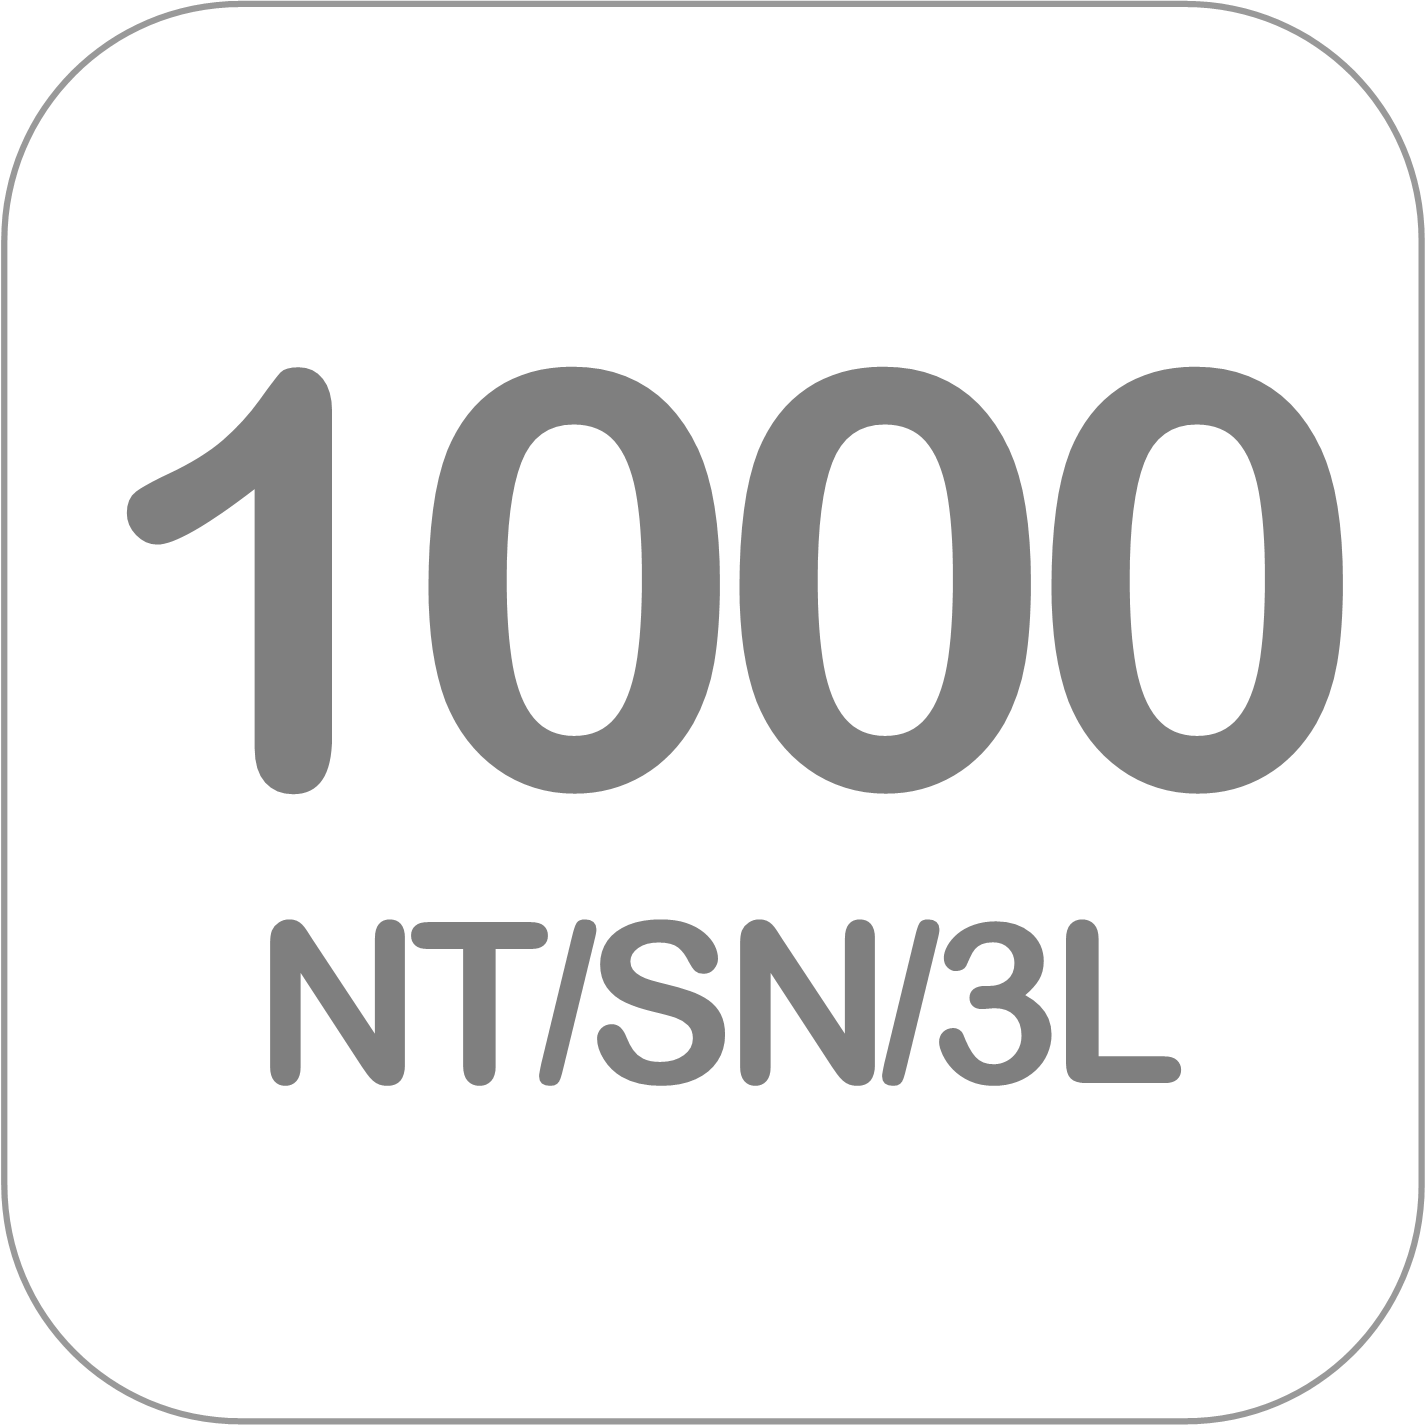 Volquete 1000 NT/SN